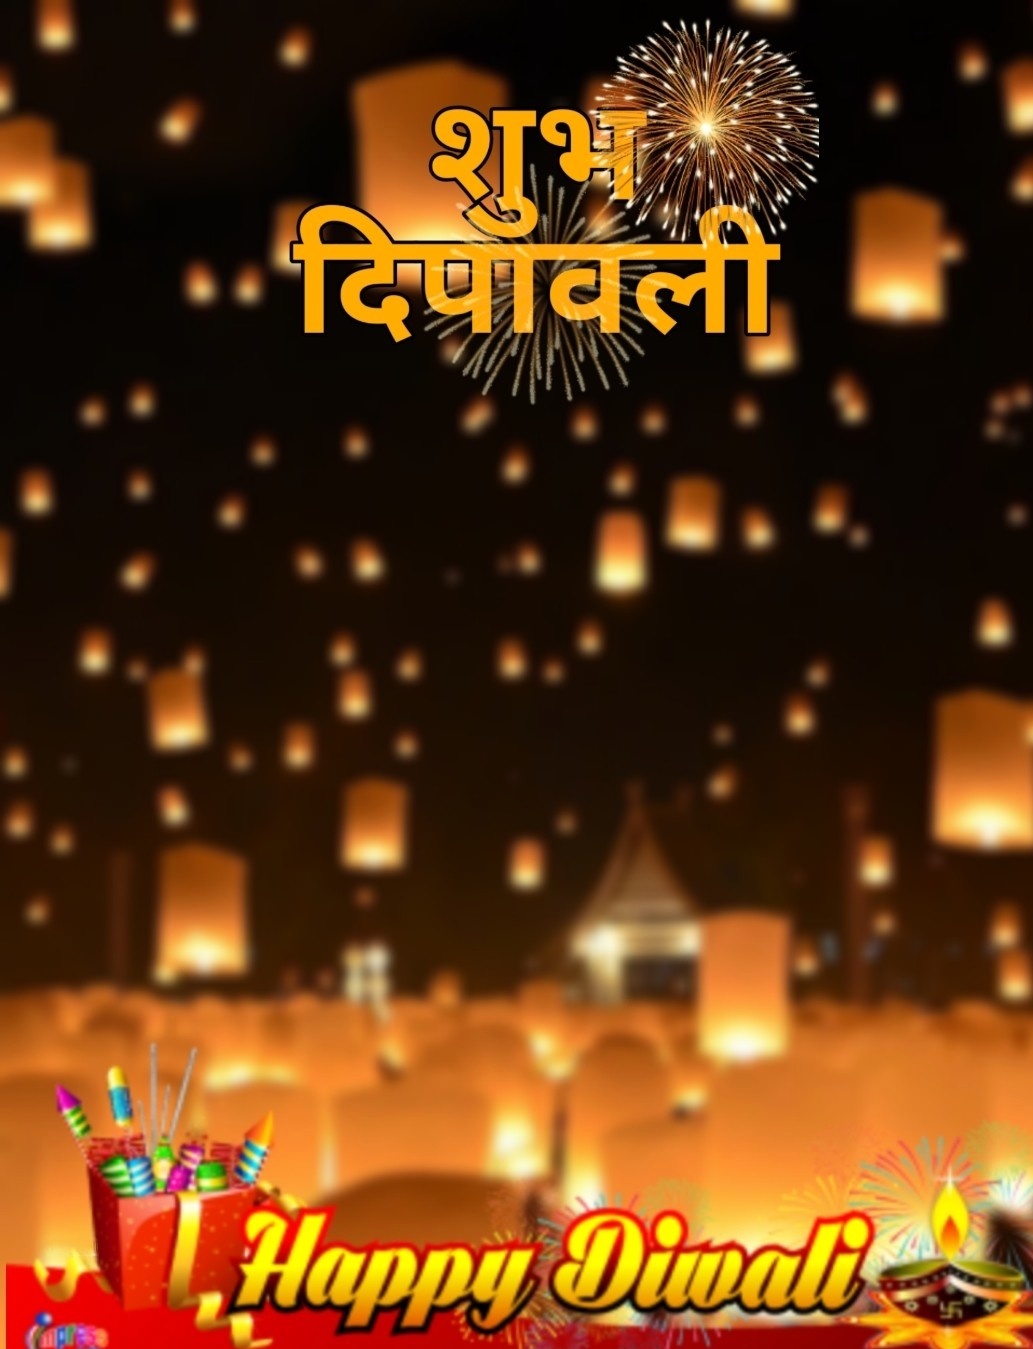 Happy Deepawali Image Amazing Night Diya